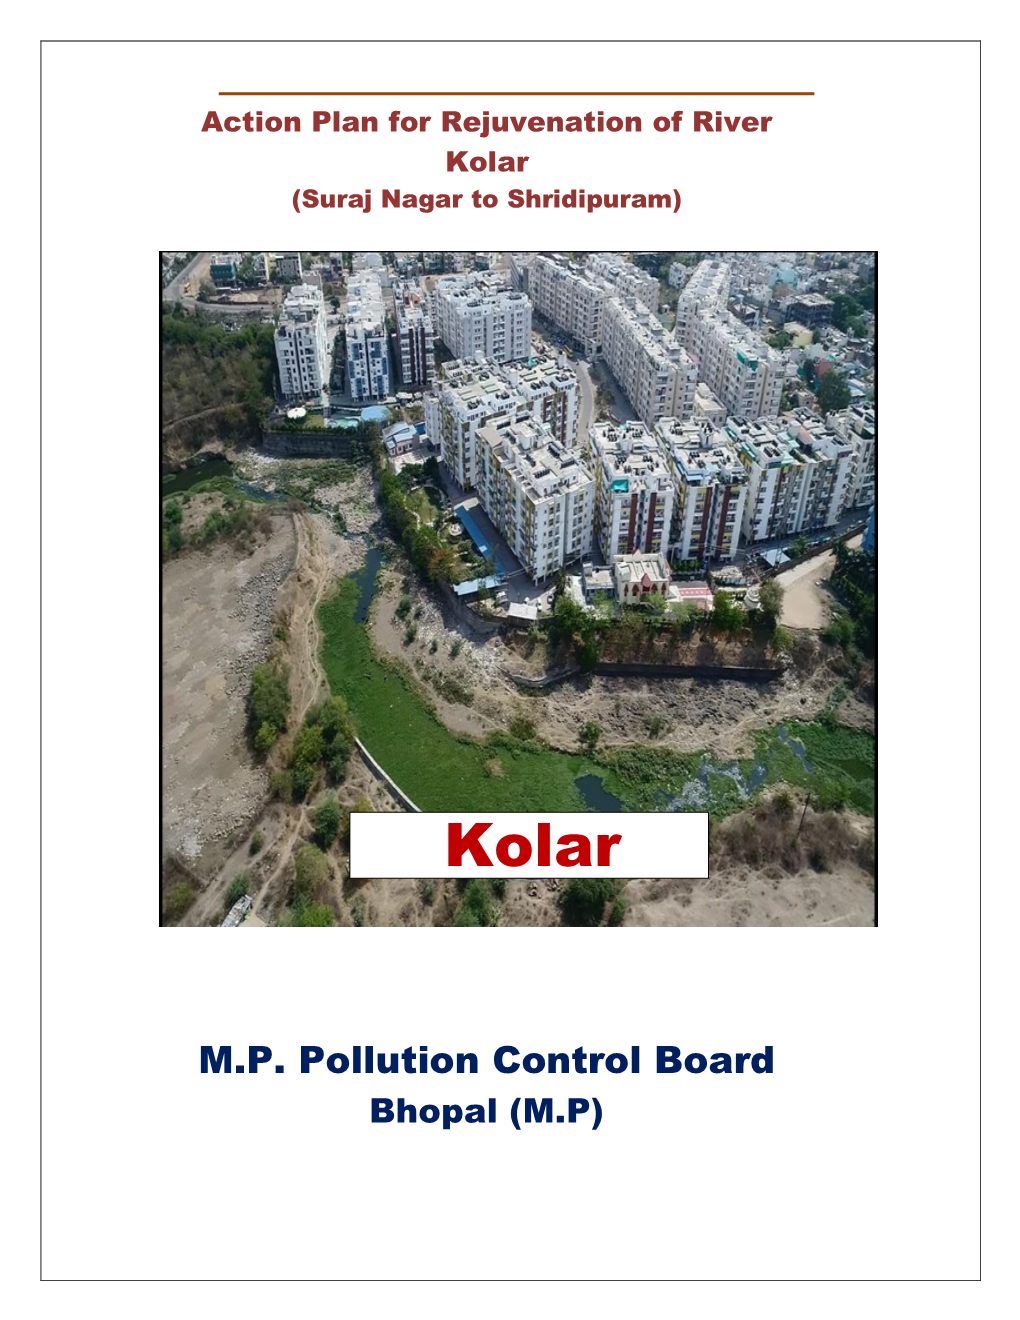 Action Plan for Rejuvenation of River Kolar (Suraj Nagar to Shridipuram)